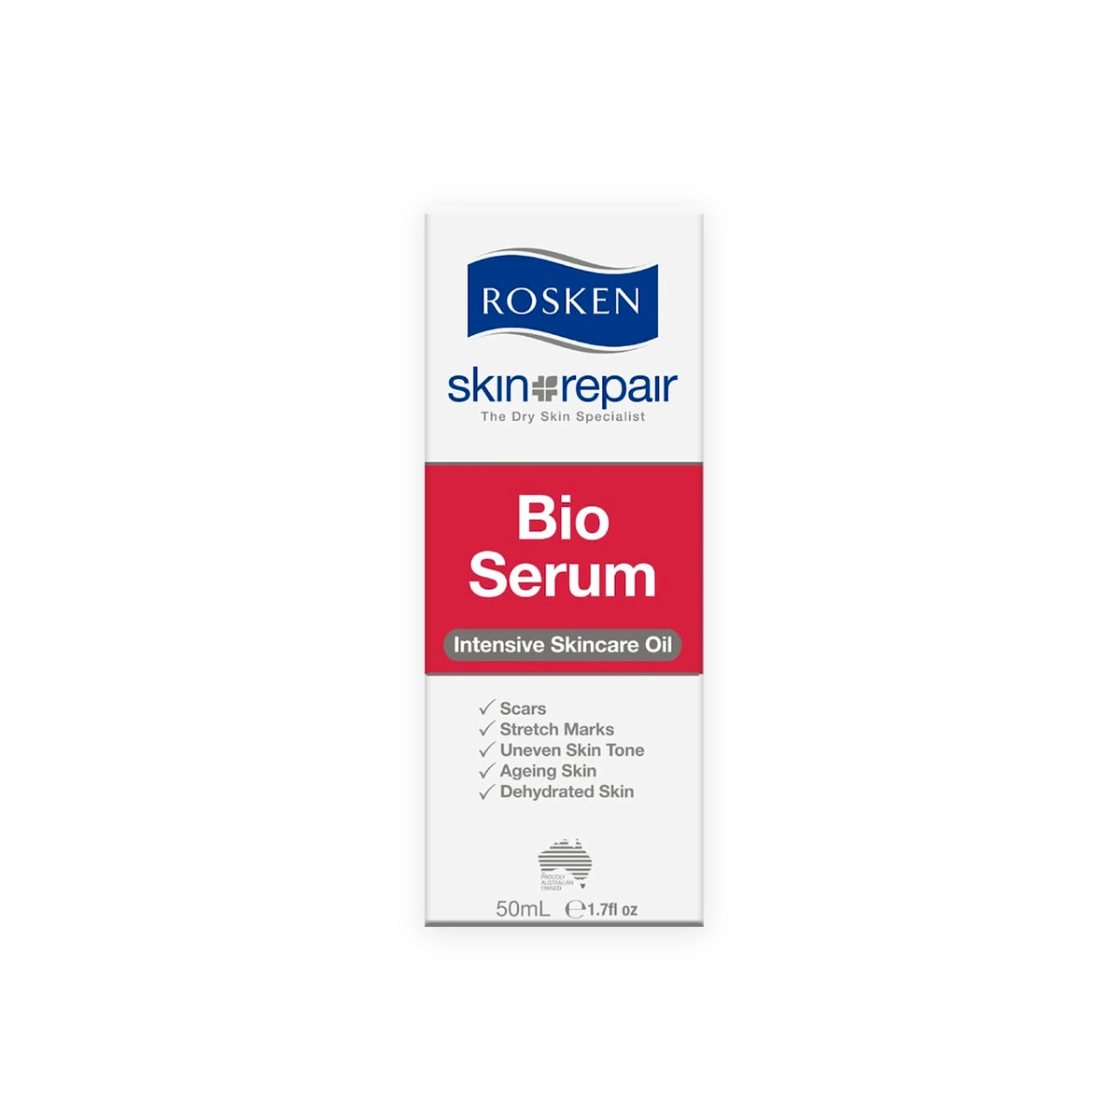 First product image of Rosken Skin Repair Bio Serum 50ml